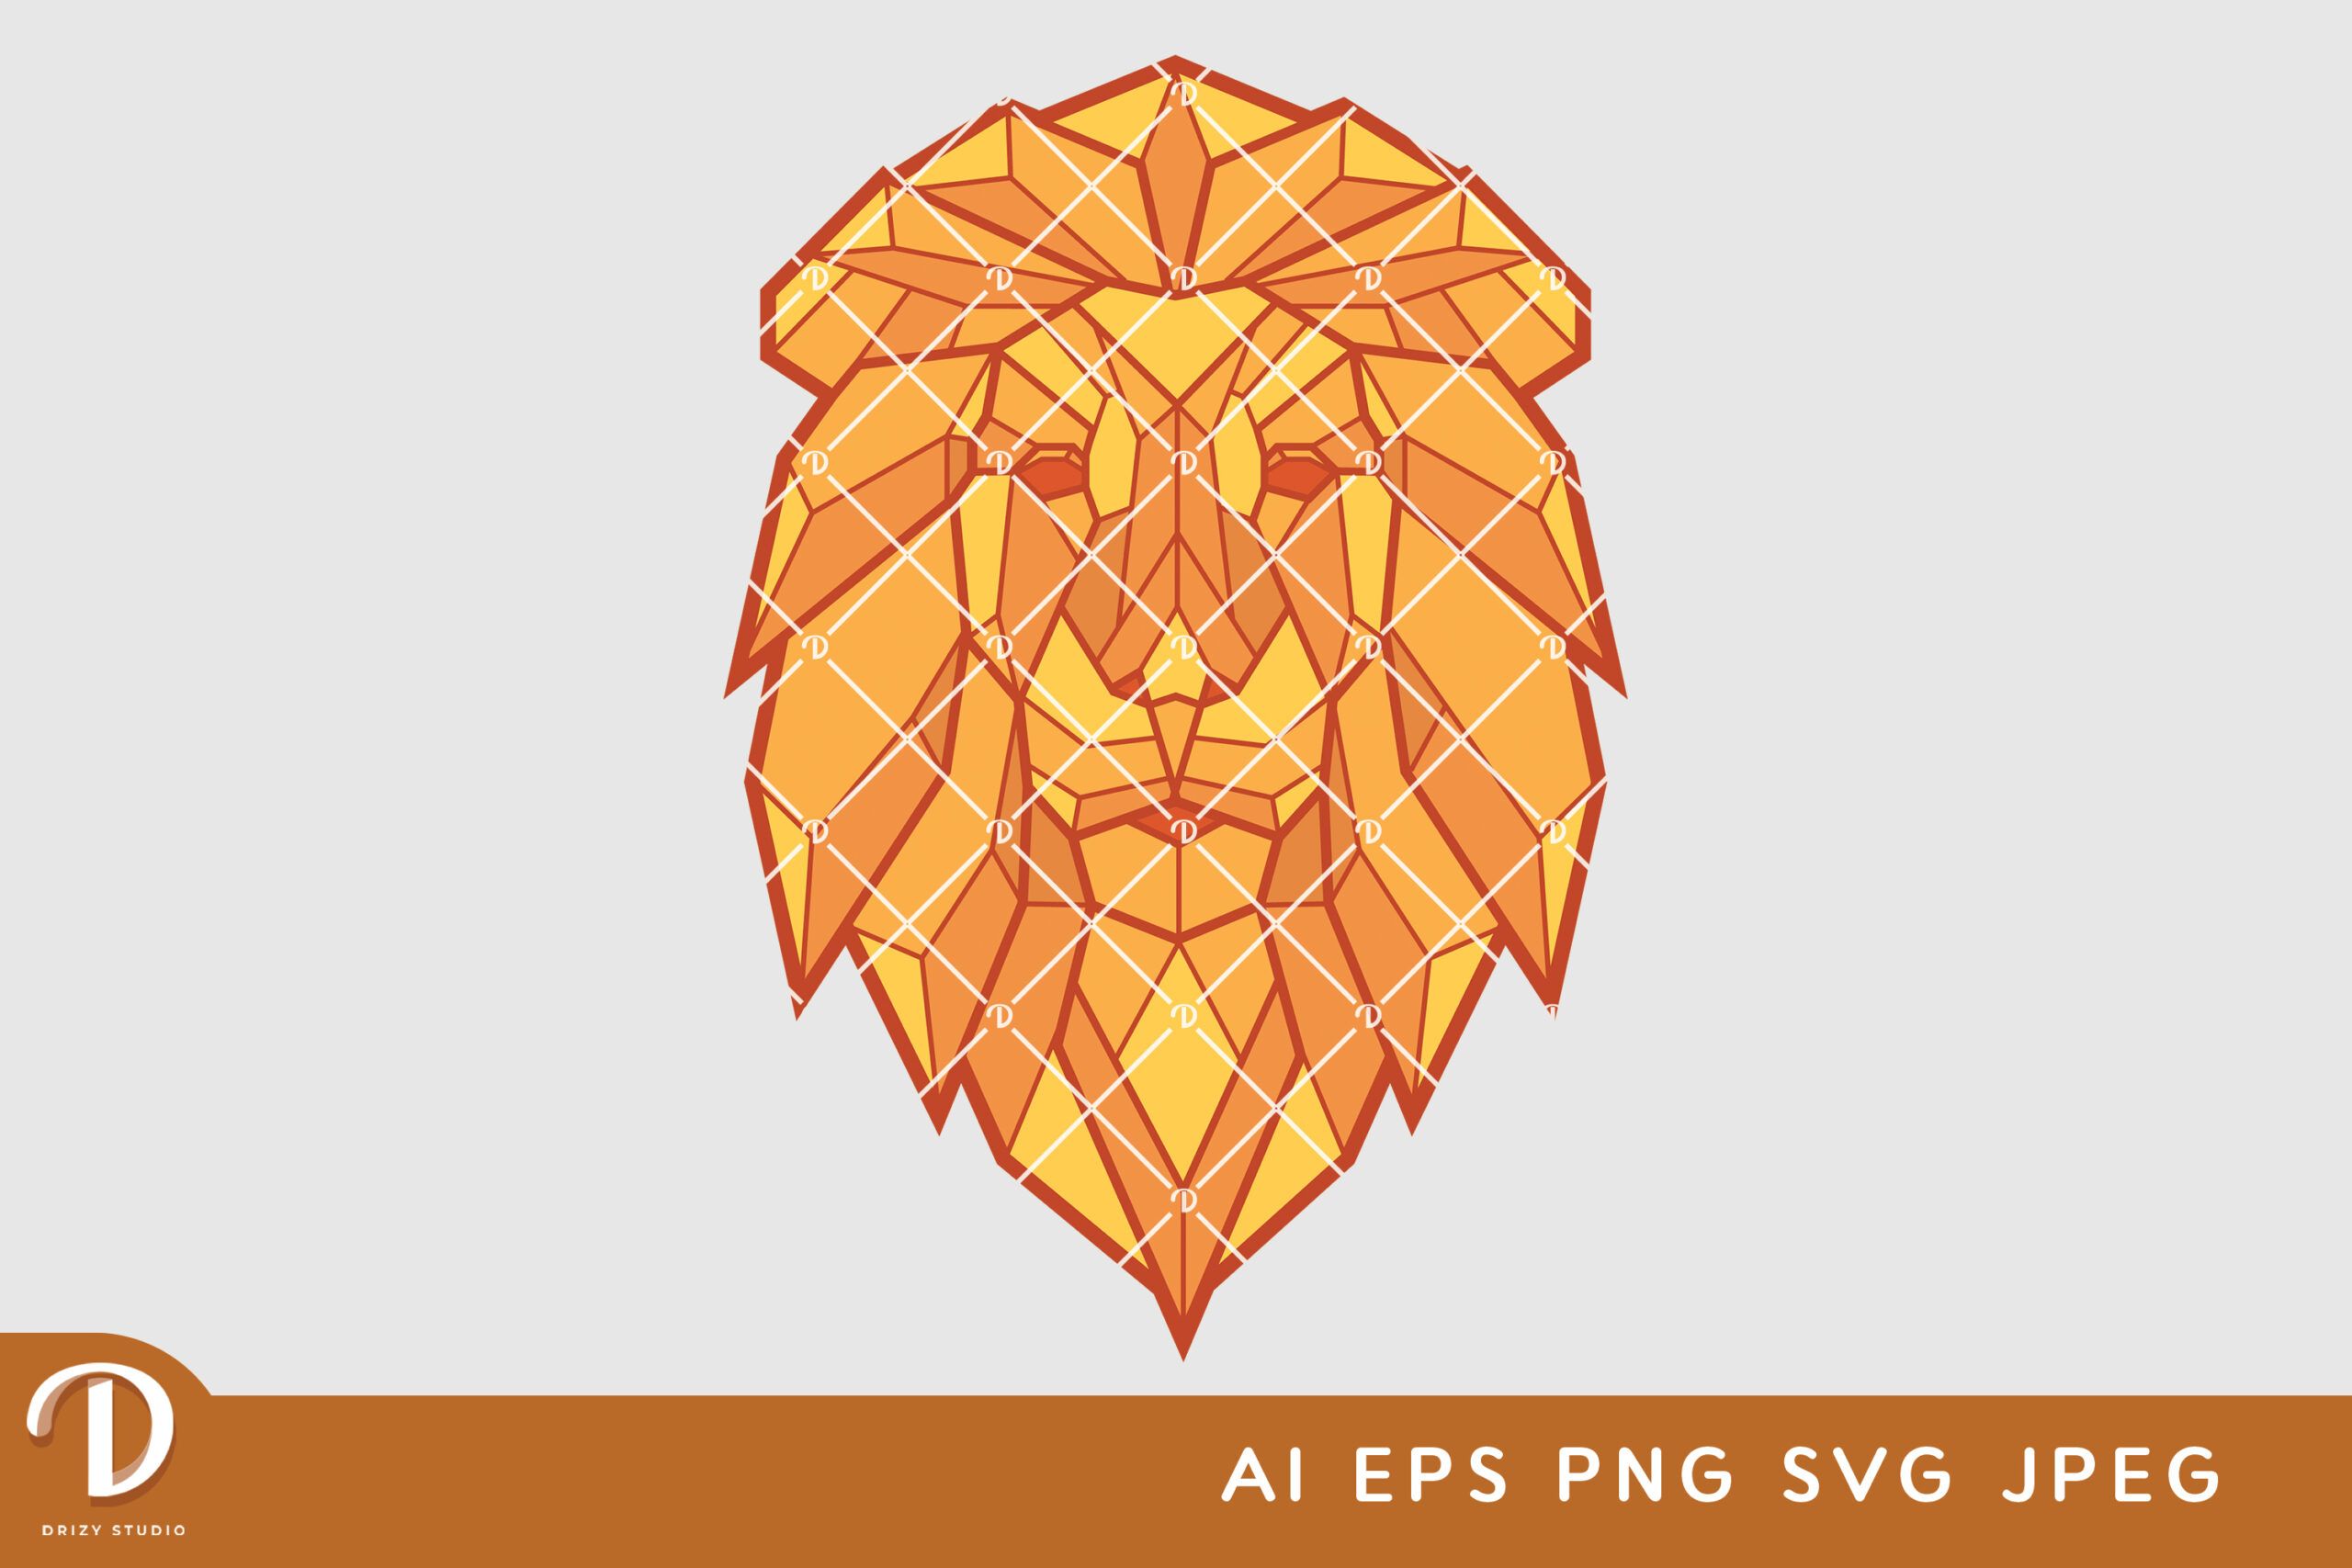 Lion King Logo Poster Flyer Social Media Post Or T Shirt Design Royalty  Free SVG, Cliparts, Vectors, and Stock Illustration. Image 189018465.